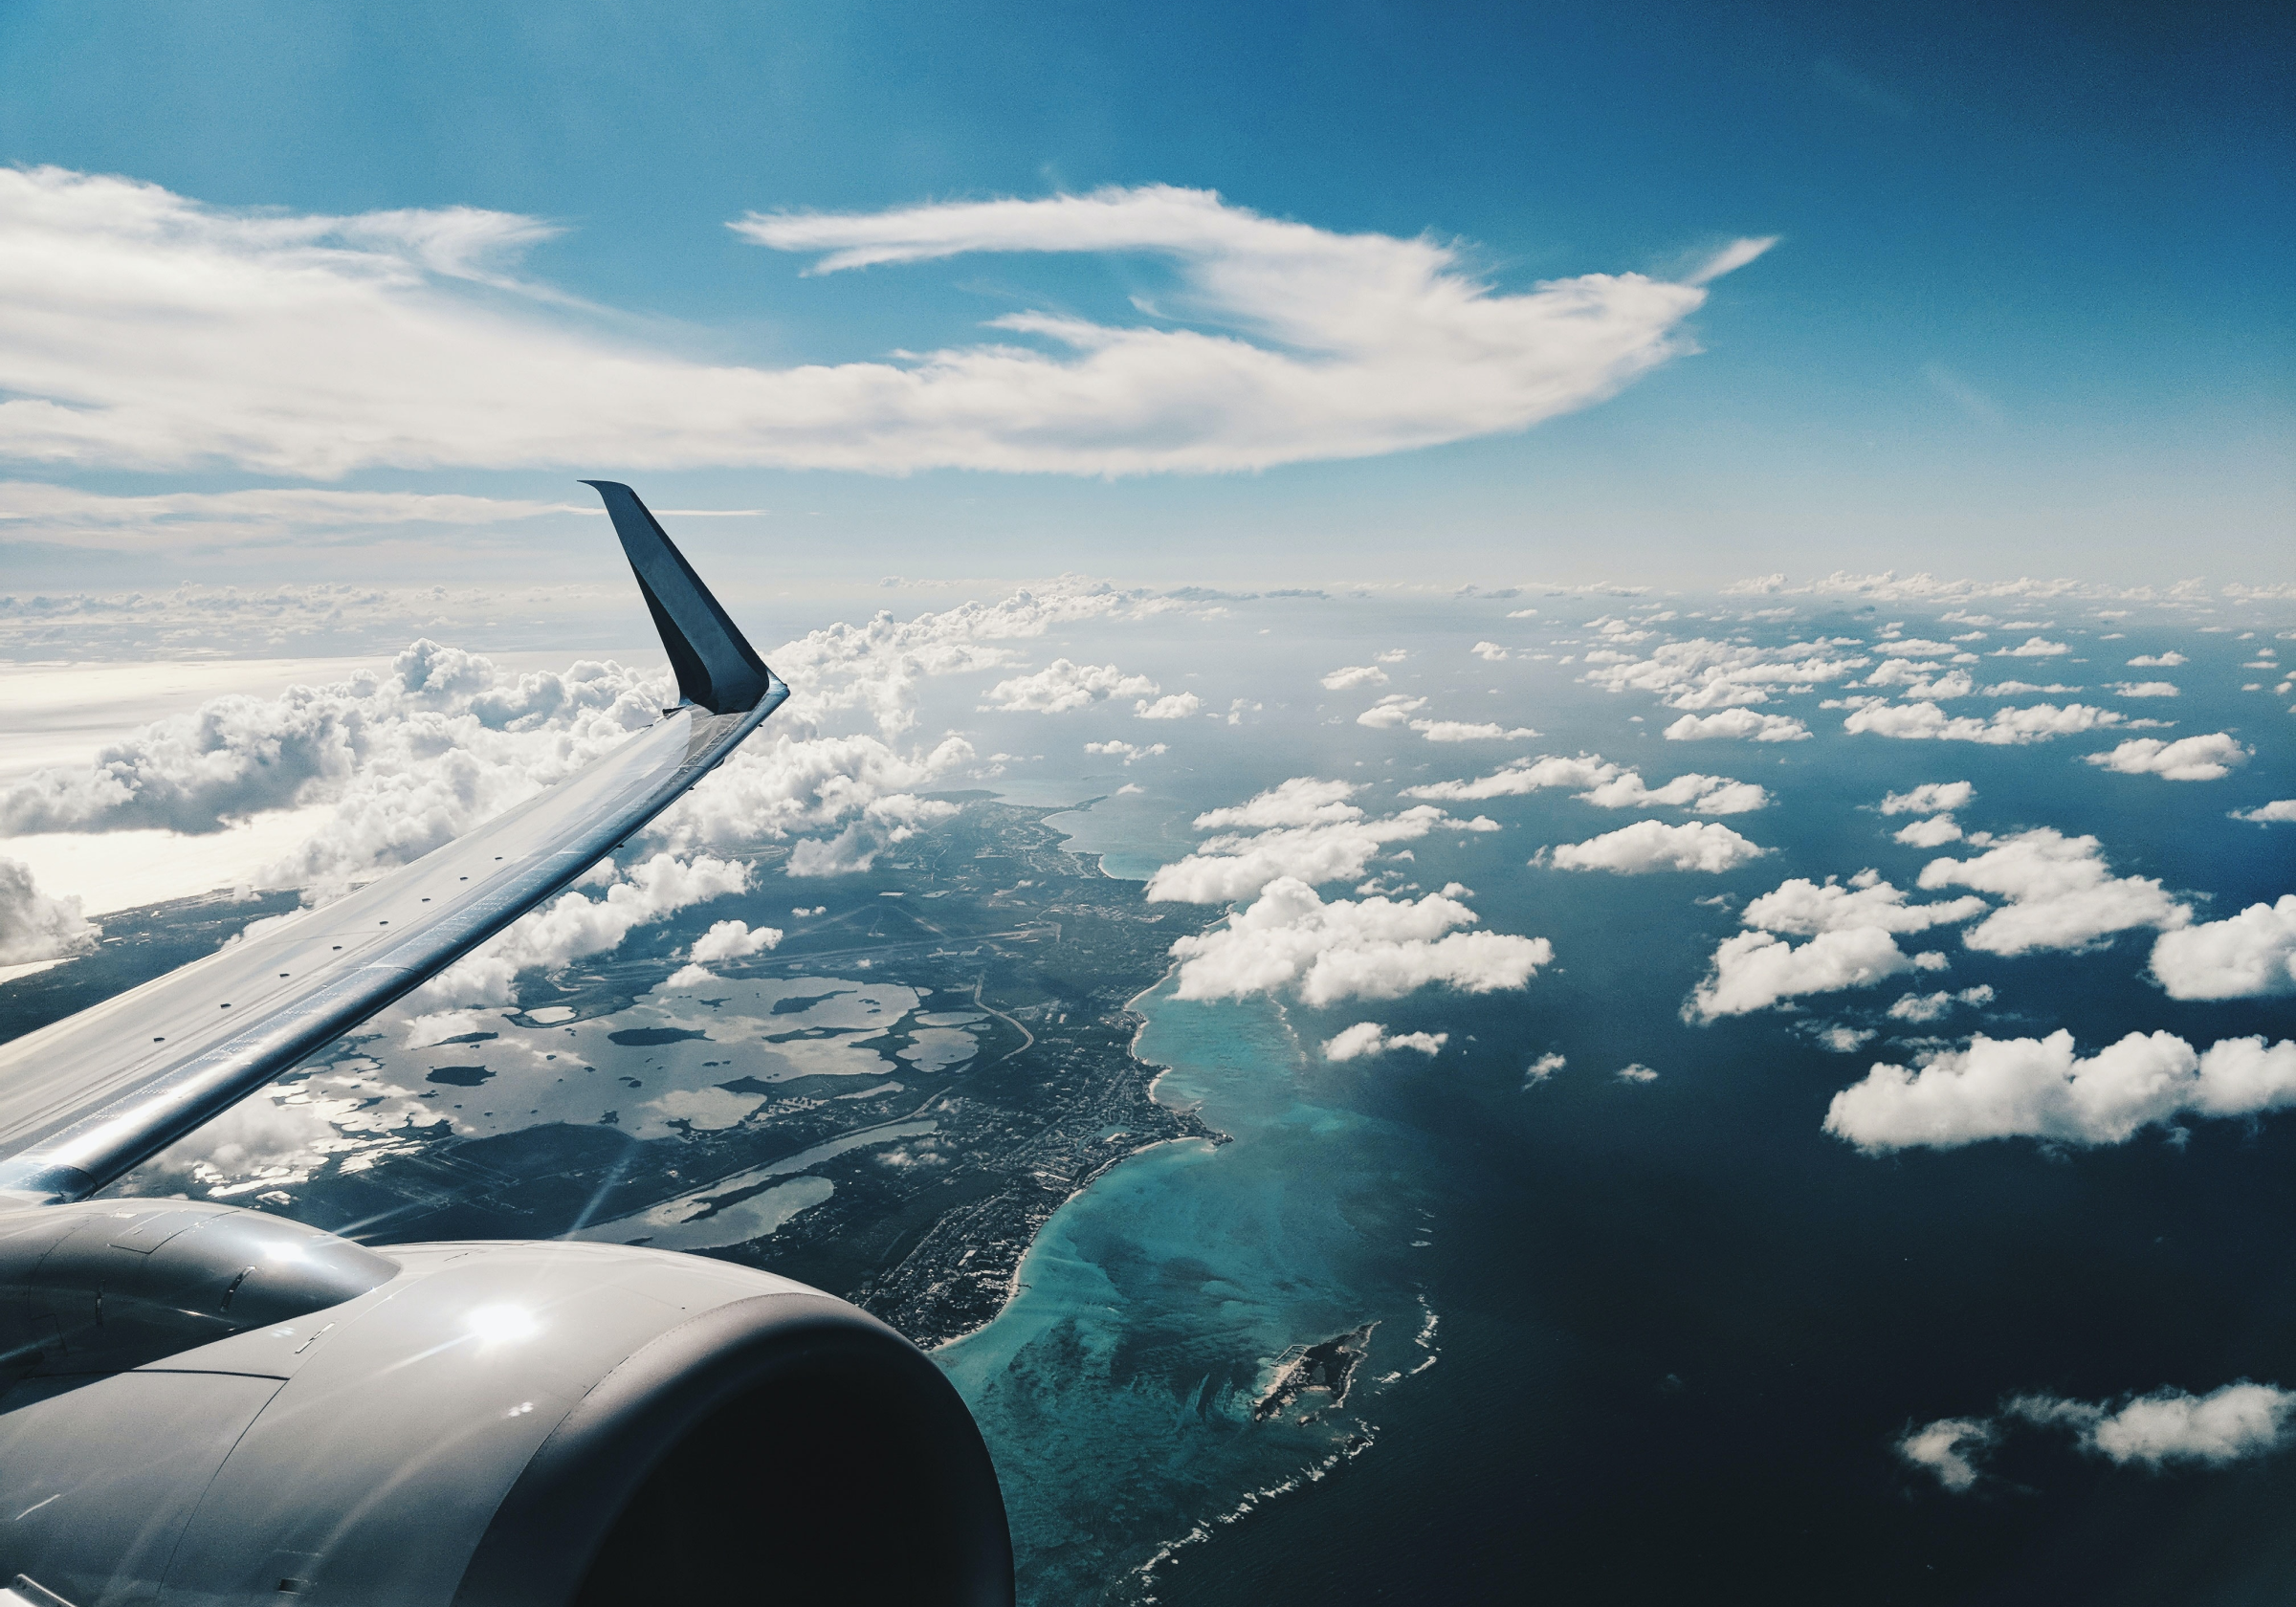 Sky High Comfort: The Benefits of Compression Socks for Long Flights